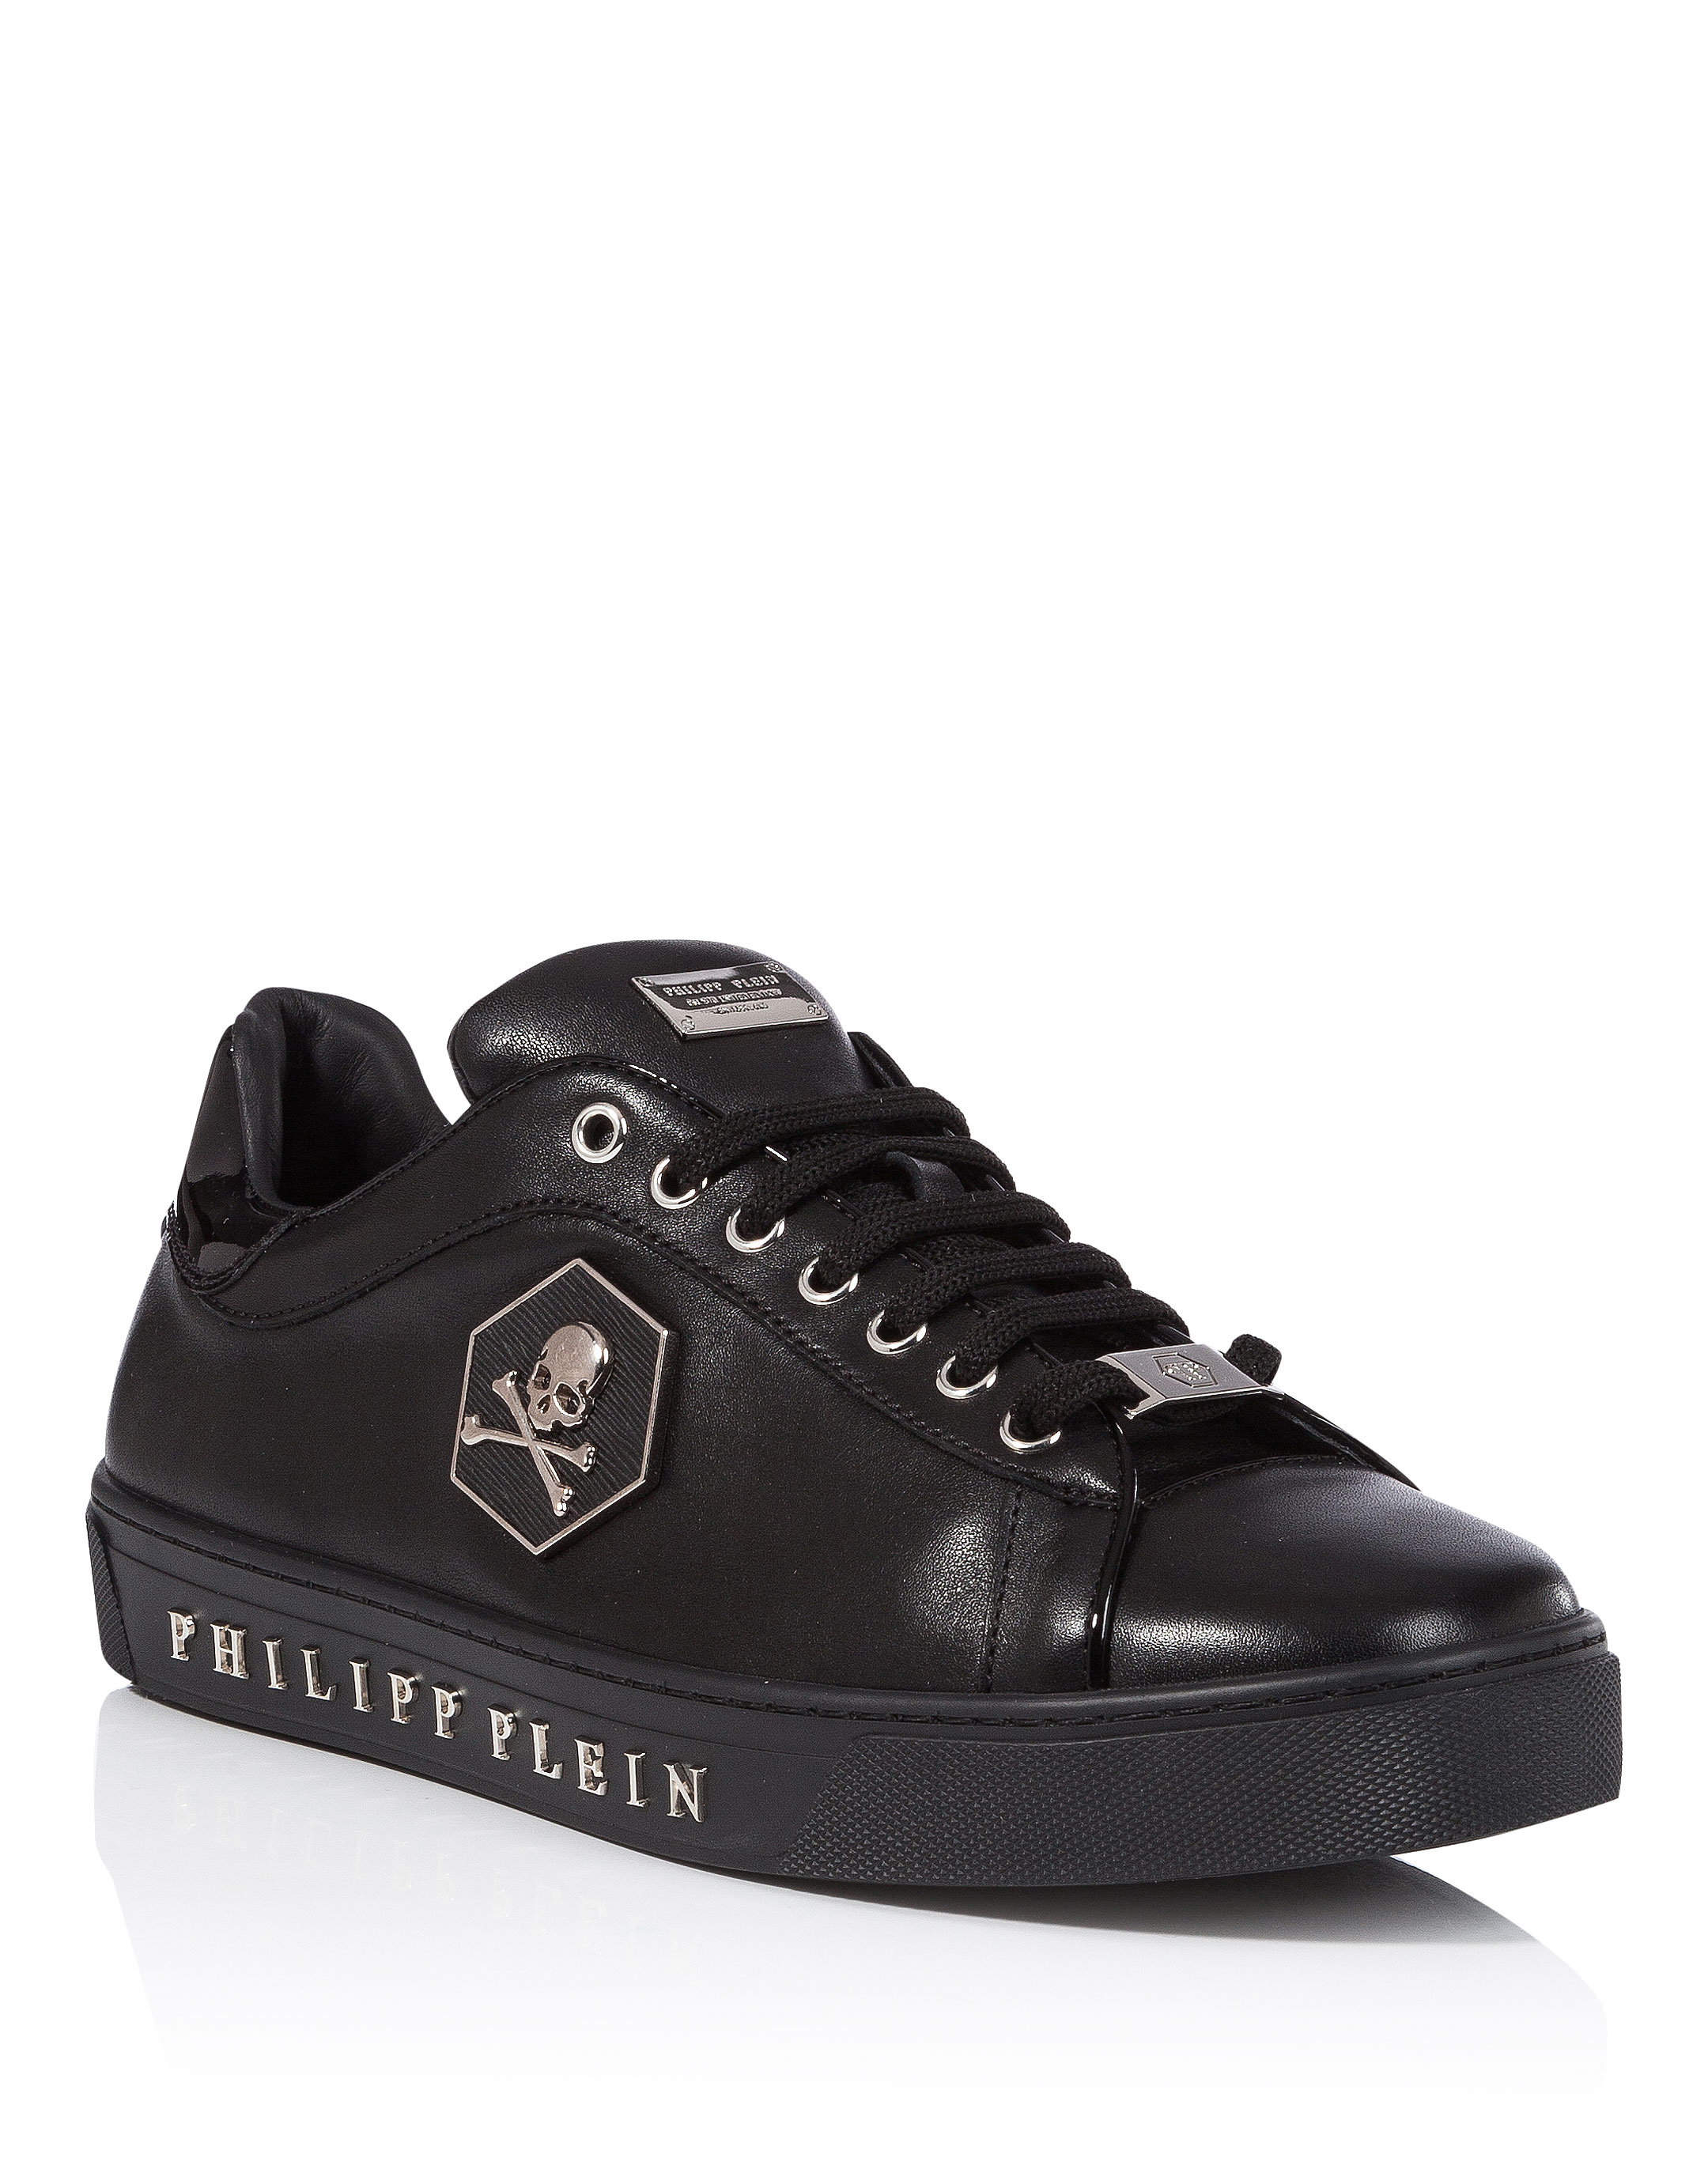 philipp plein shoes sneakers